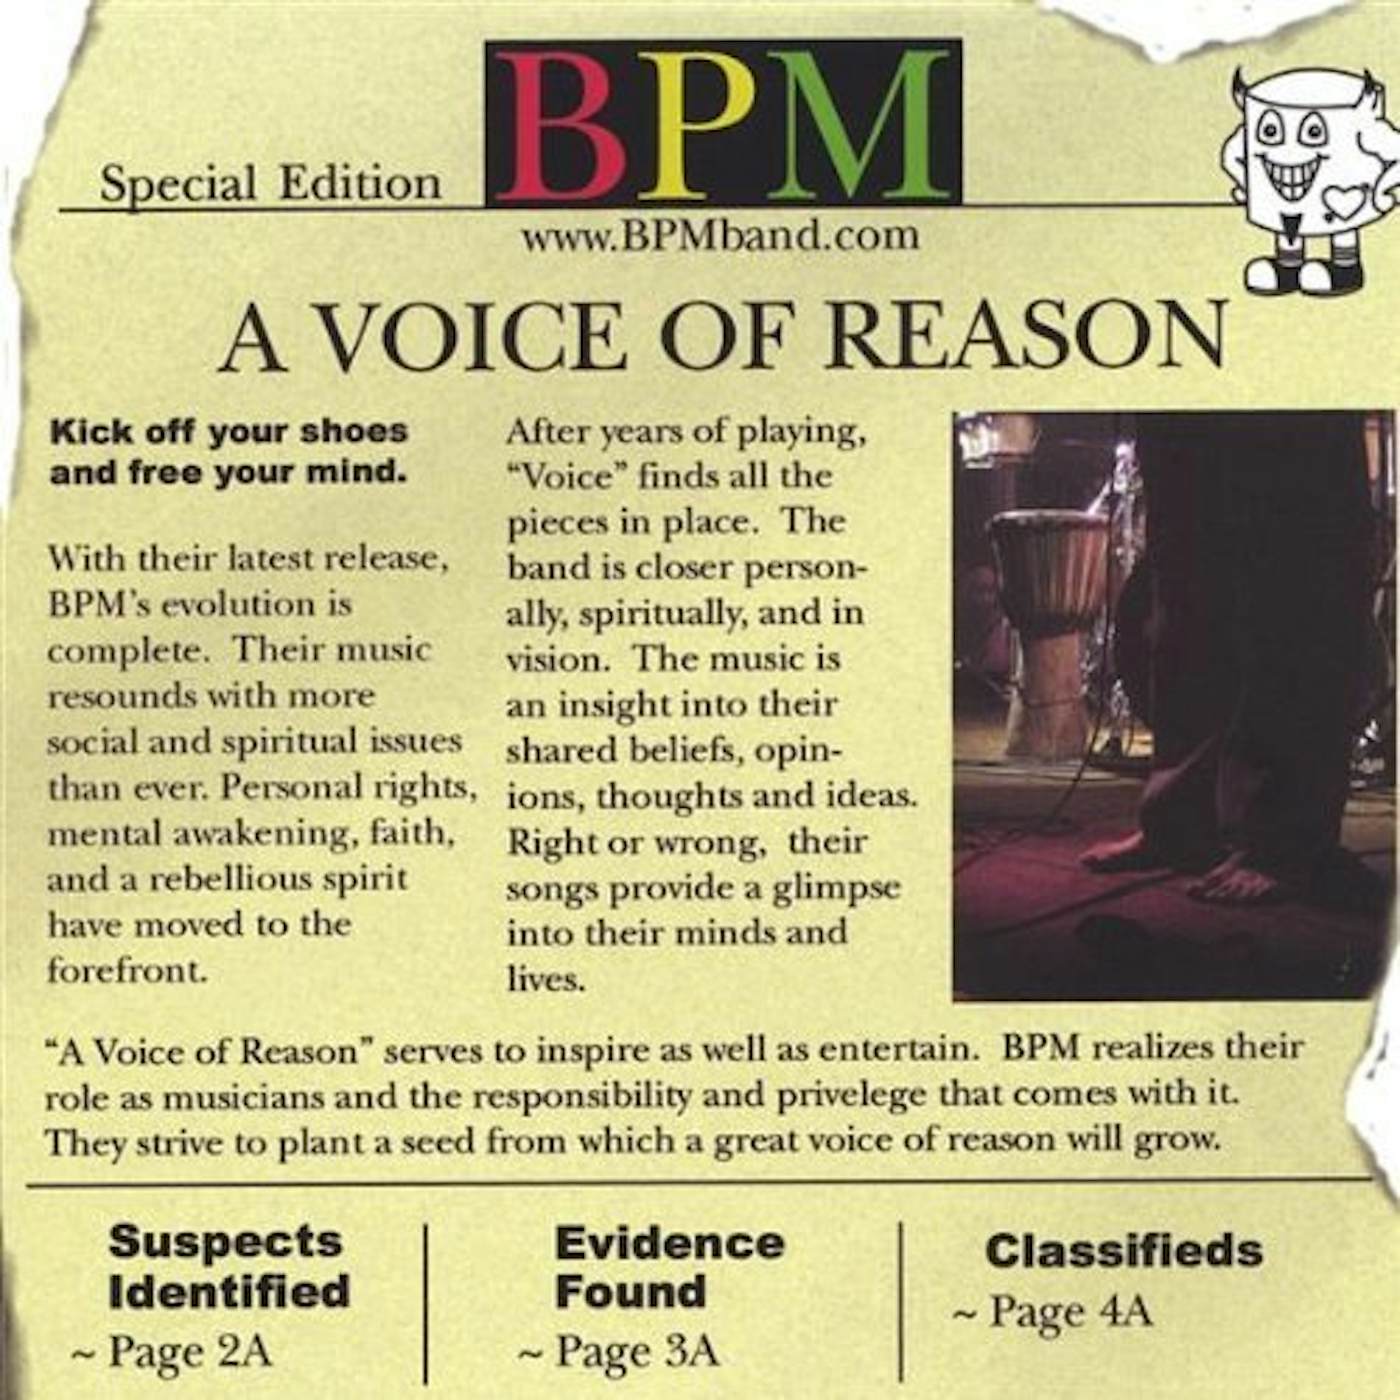 BPM VOICE OF REASON CD